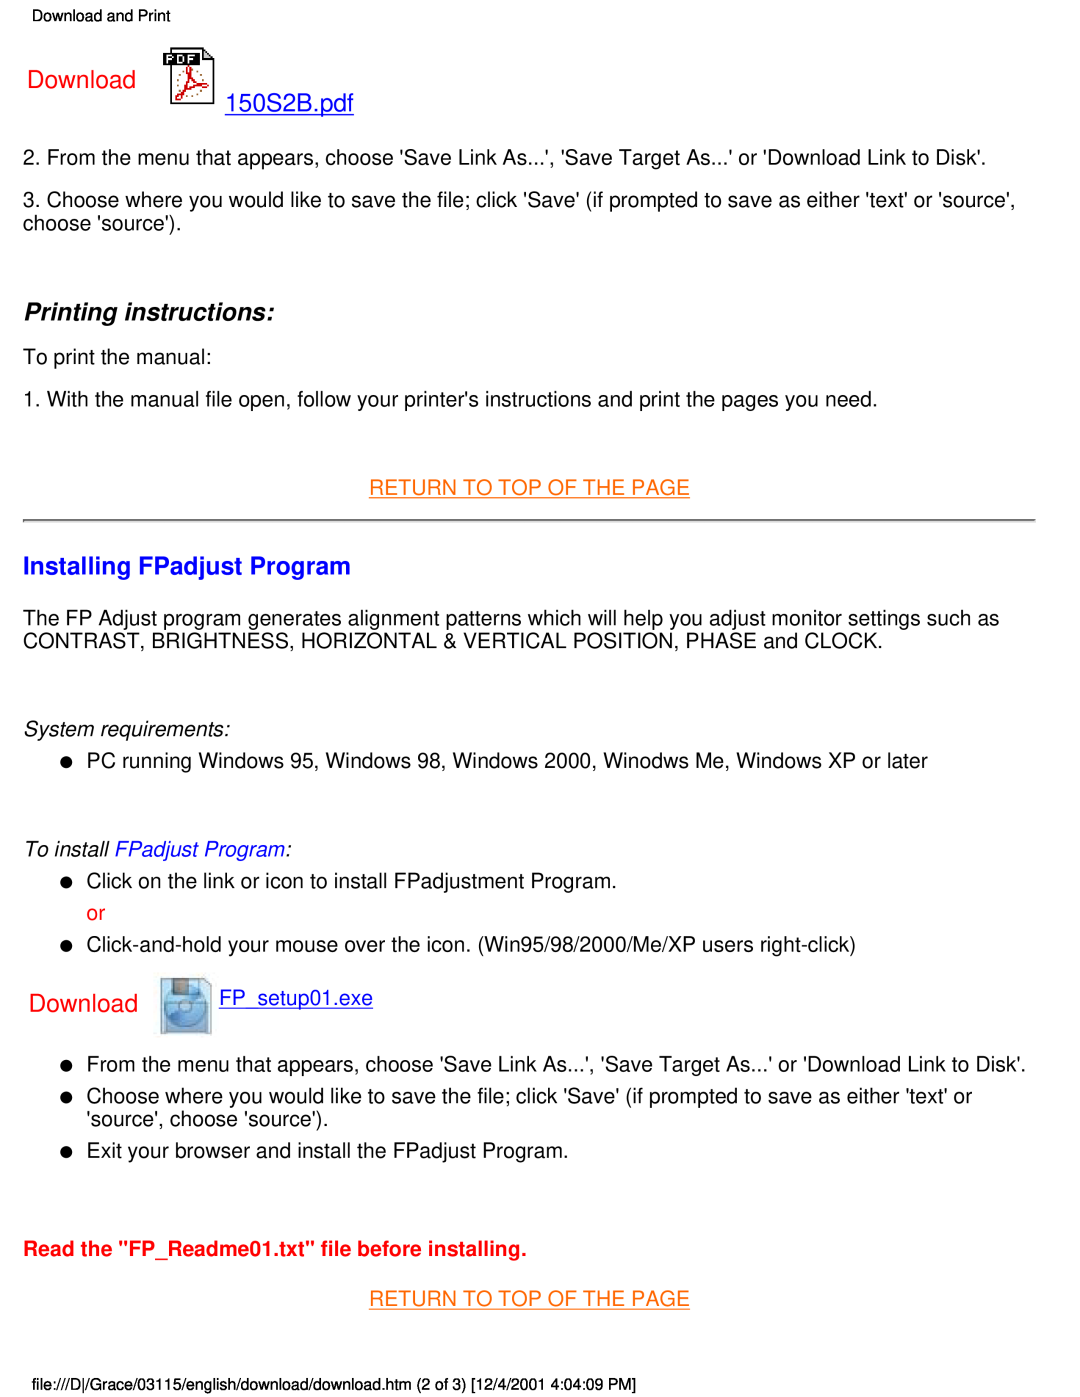 Philips Download, 150S2B.pdf, Printing instructions, Installing FPadjust Program, To install FPadjust Program 